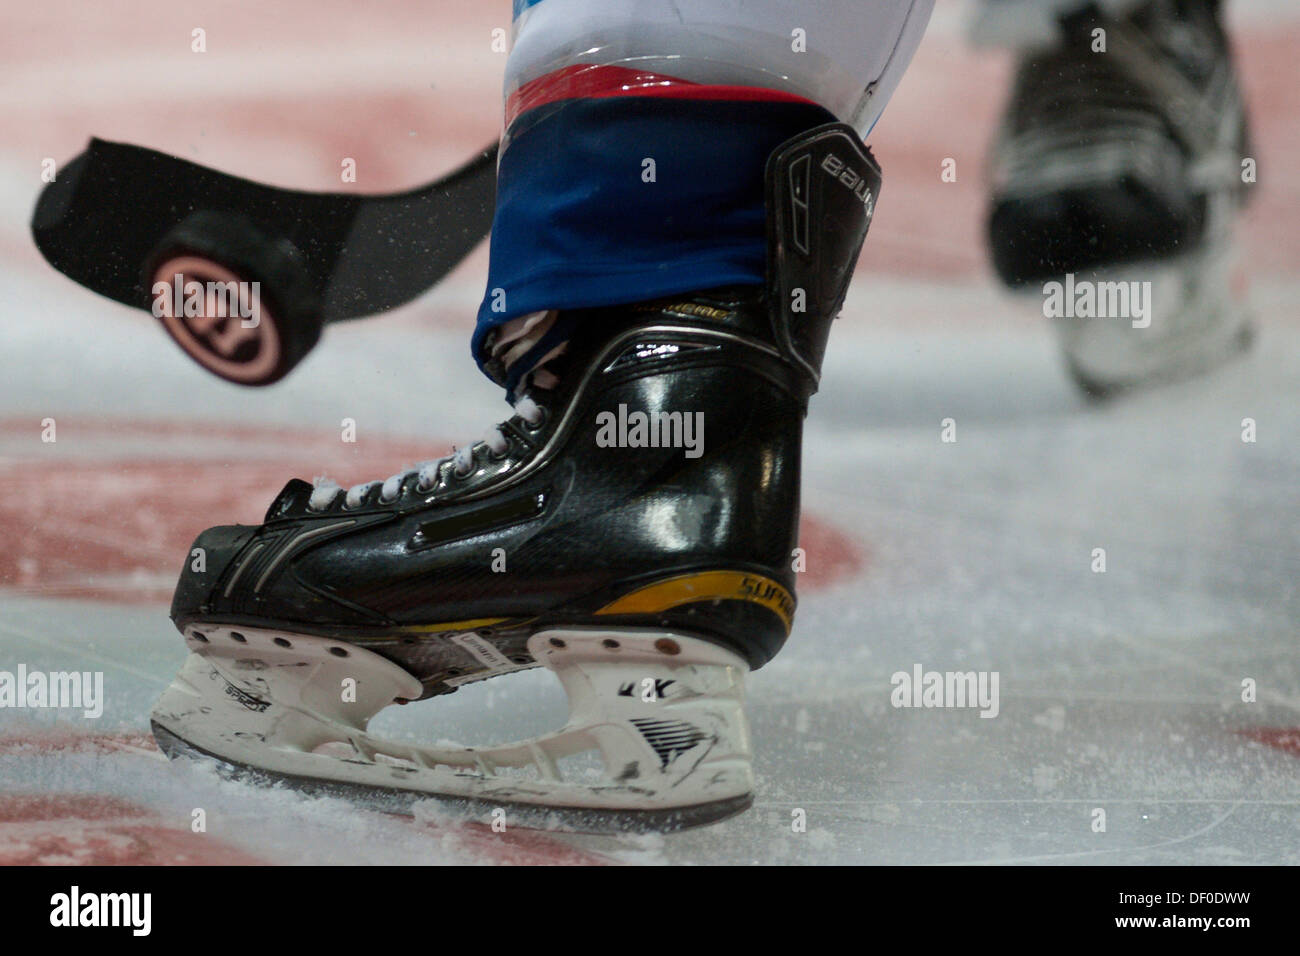 Detail view of ice hockey skates, ice hockey stick Stock Photo